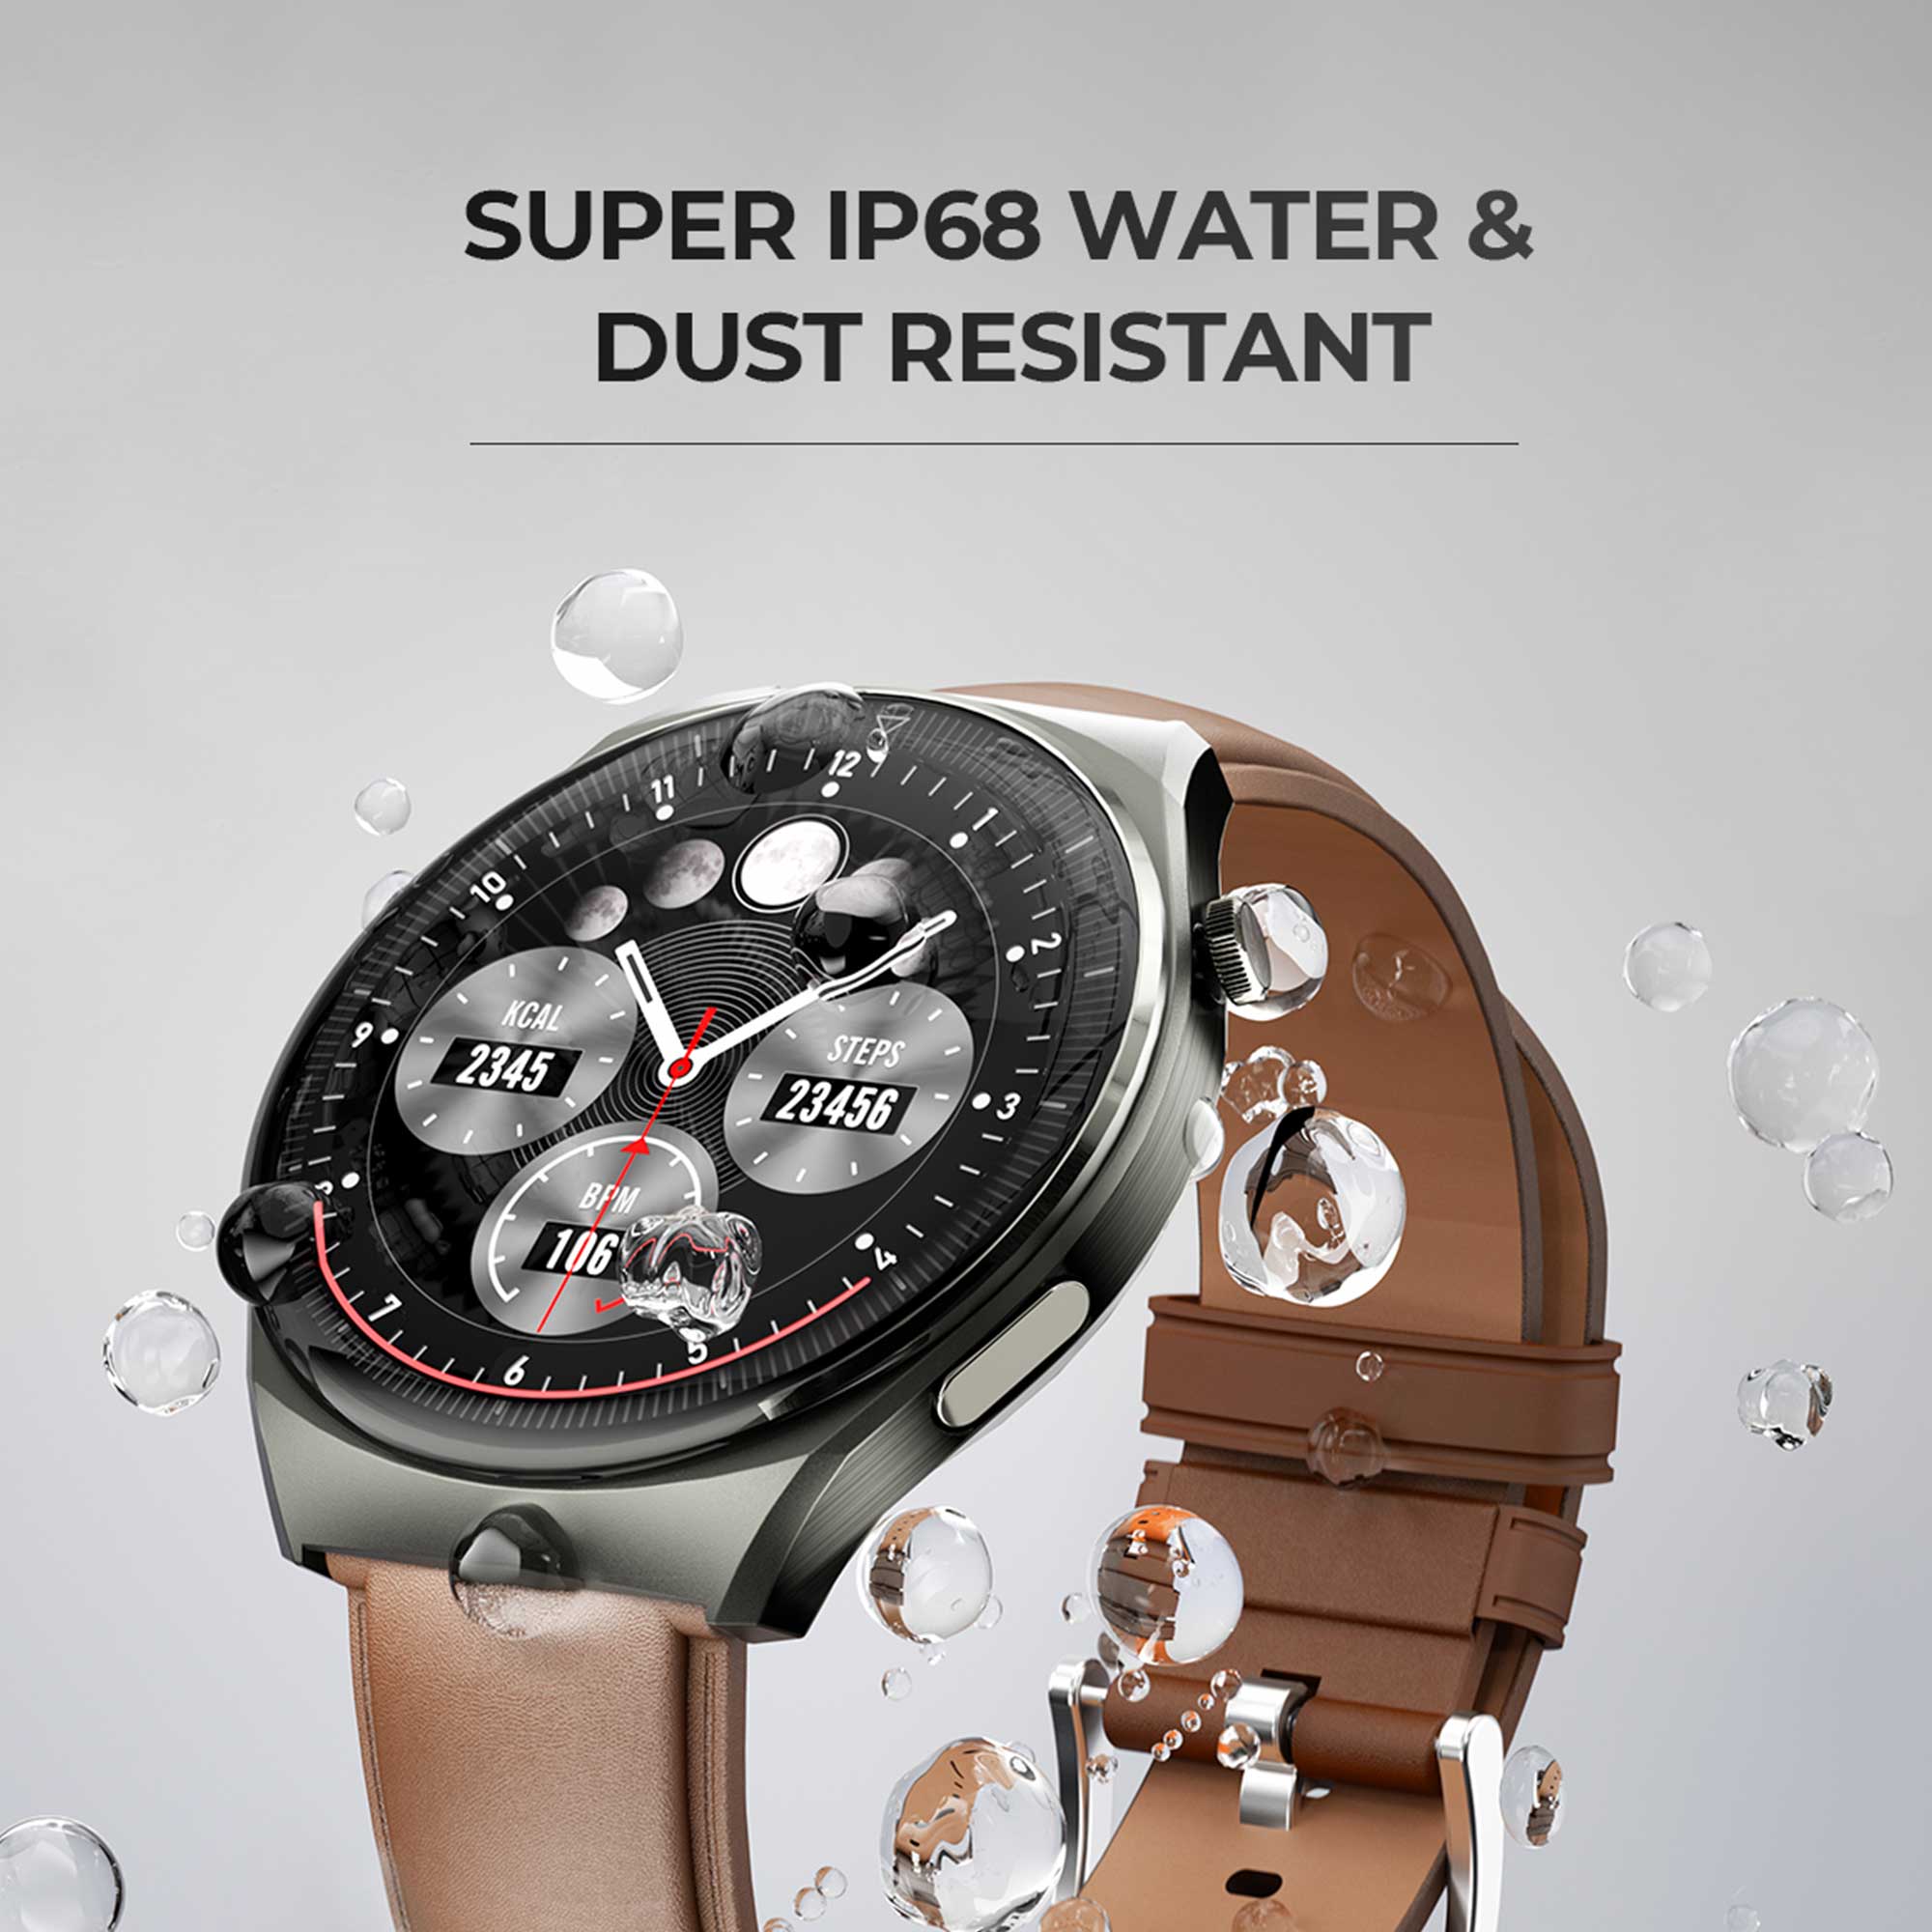 SW-2U Alloy Frame Amoled Display Smart Watch